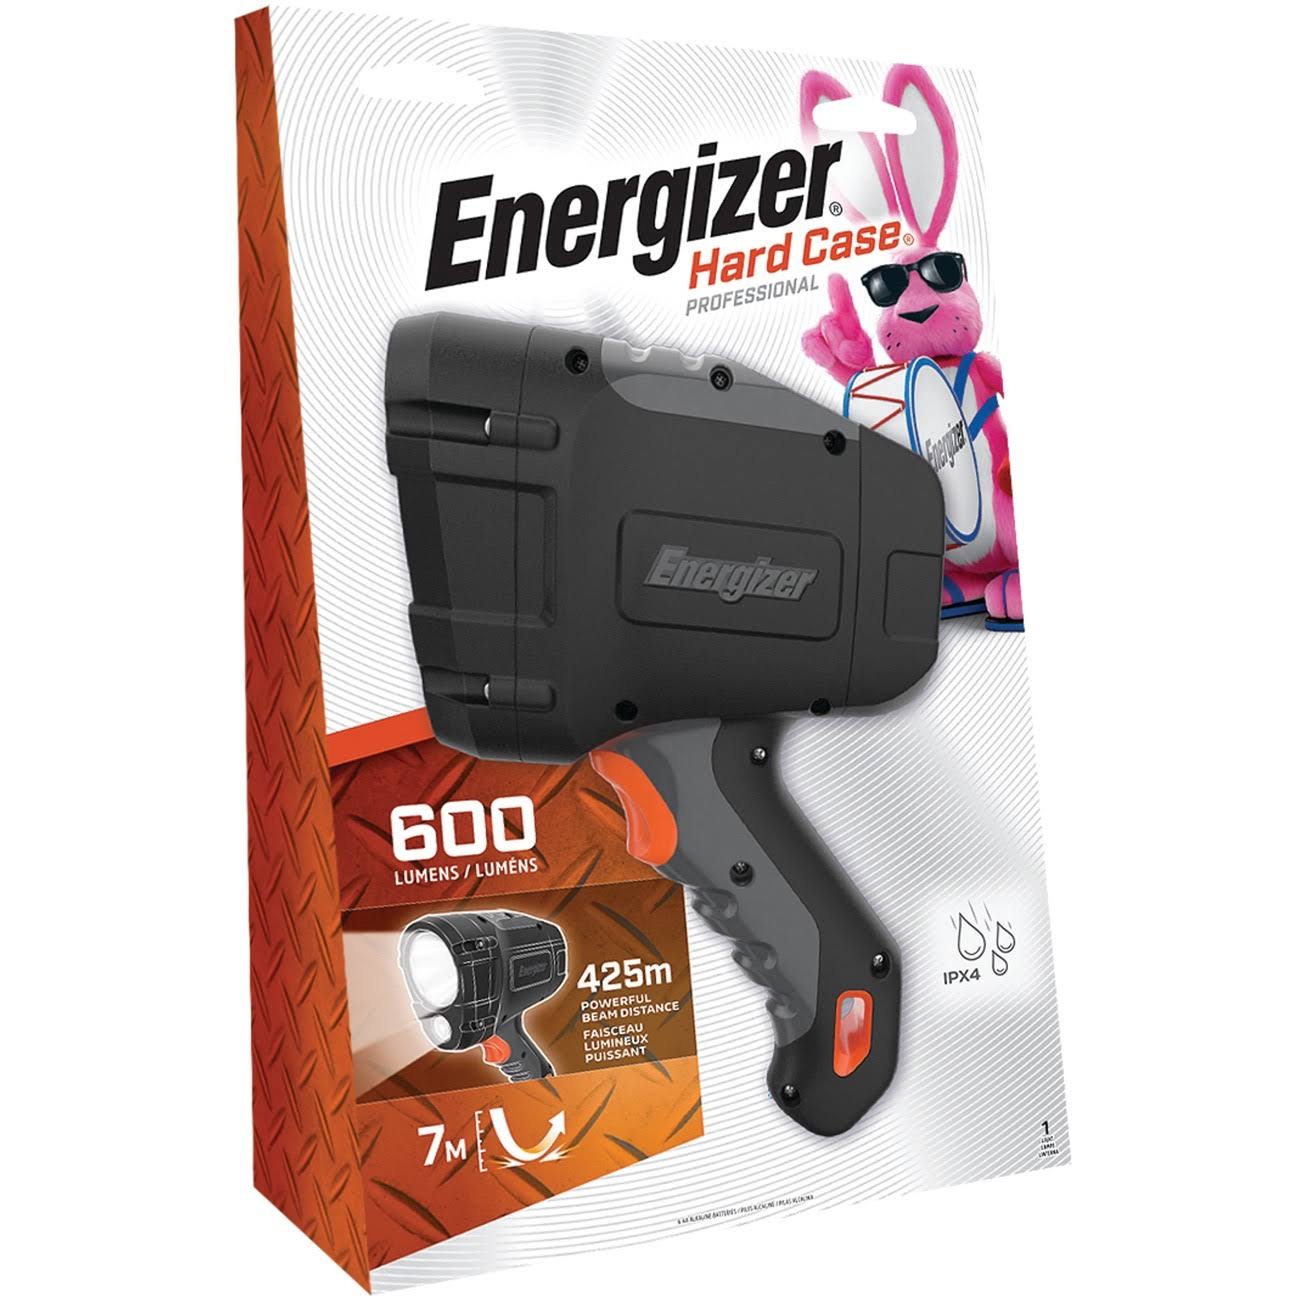 Energizer Hard Case Professional Led Spotlight - Black